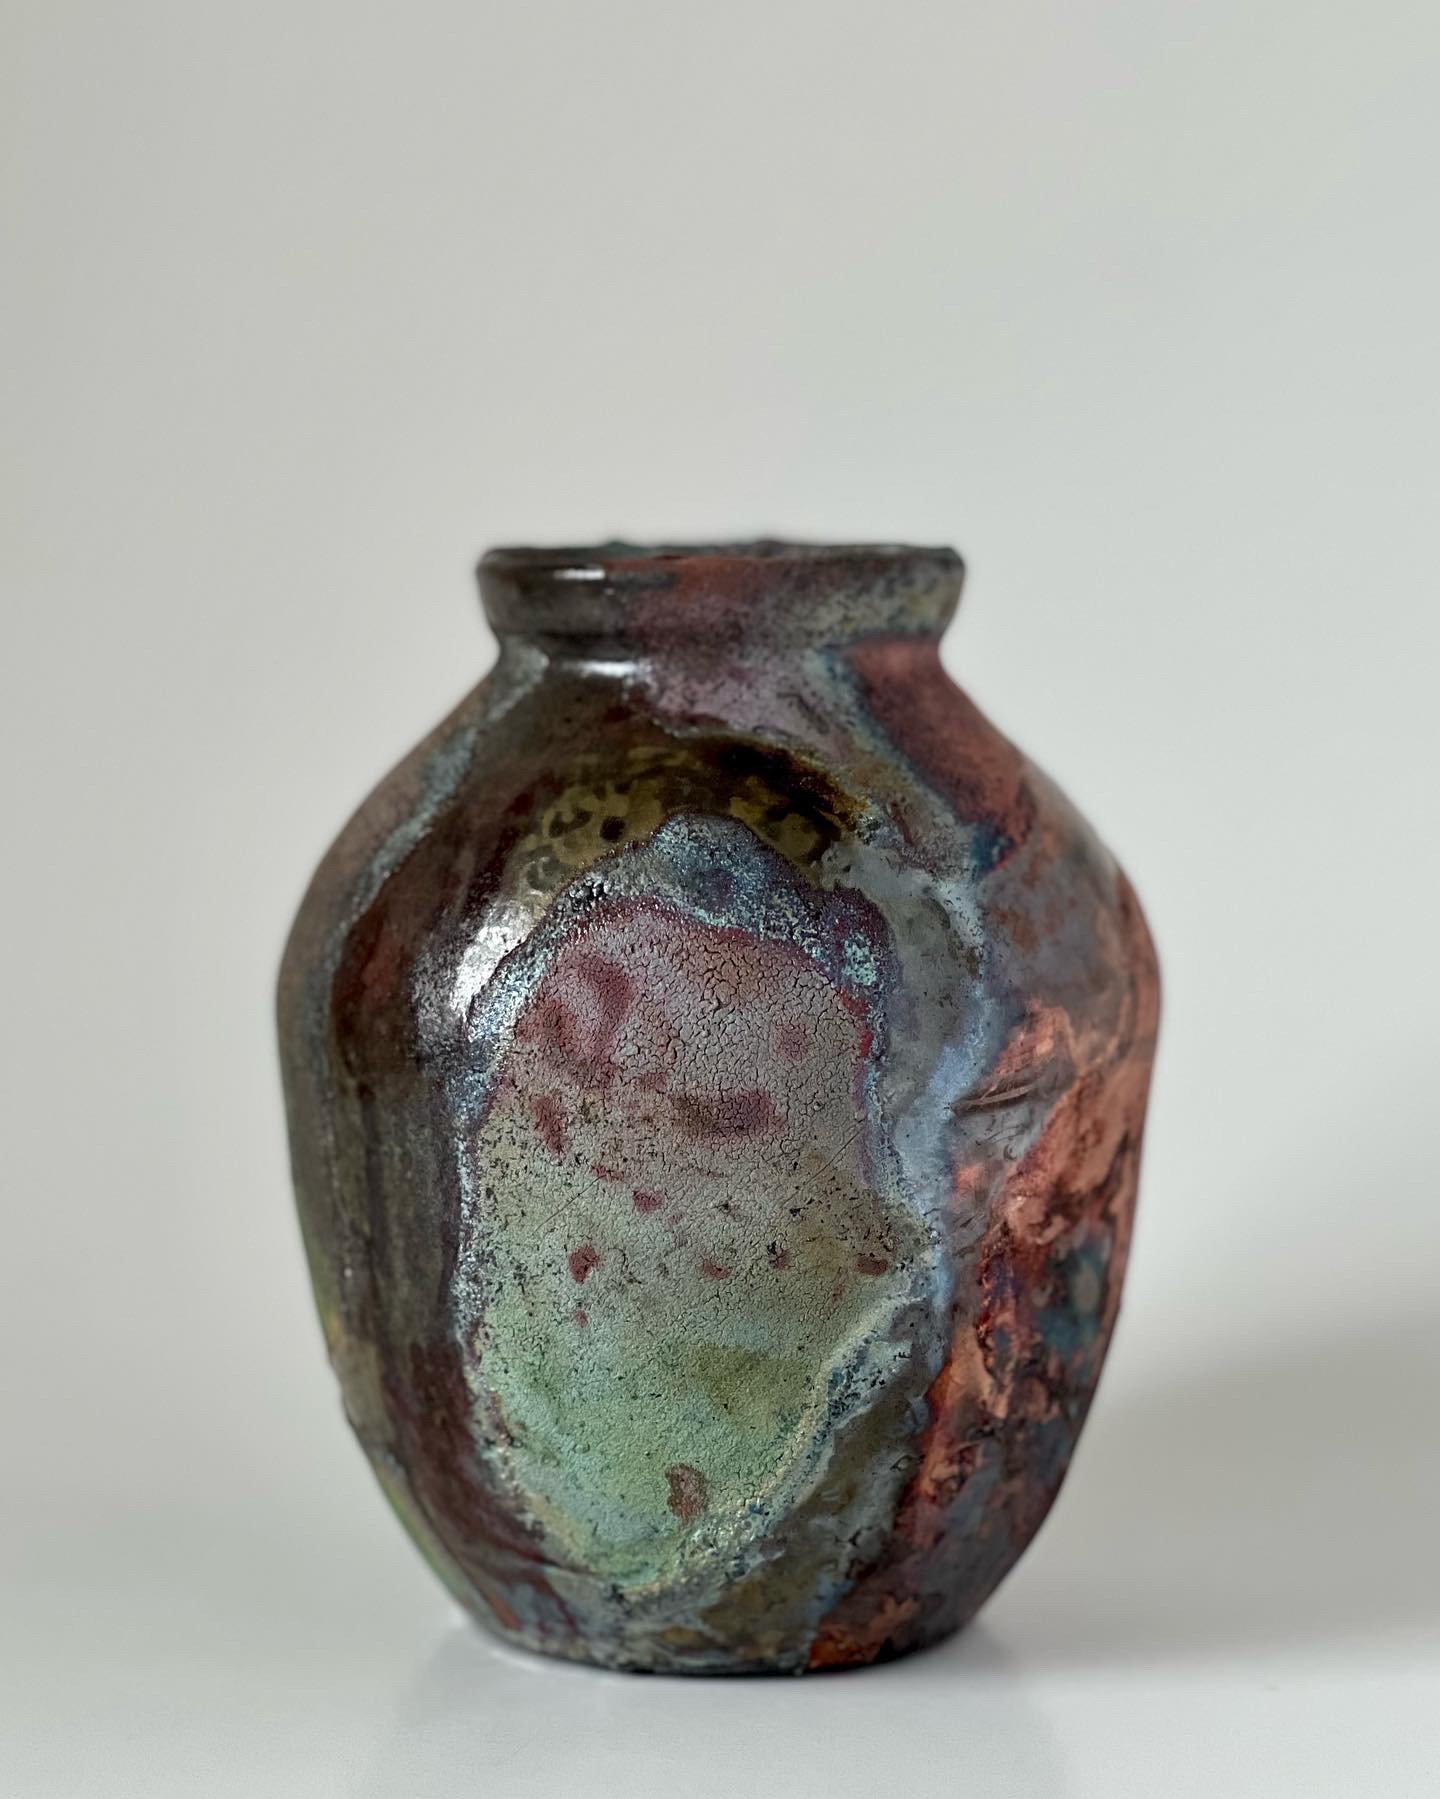 Krystal Yavicoli, "A River Runs Through It," 2023. Raku ceramic and glaze, 5 ¼ x 4 ¼ x 4 ¼ in.